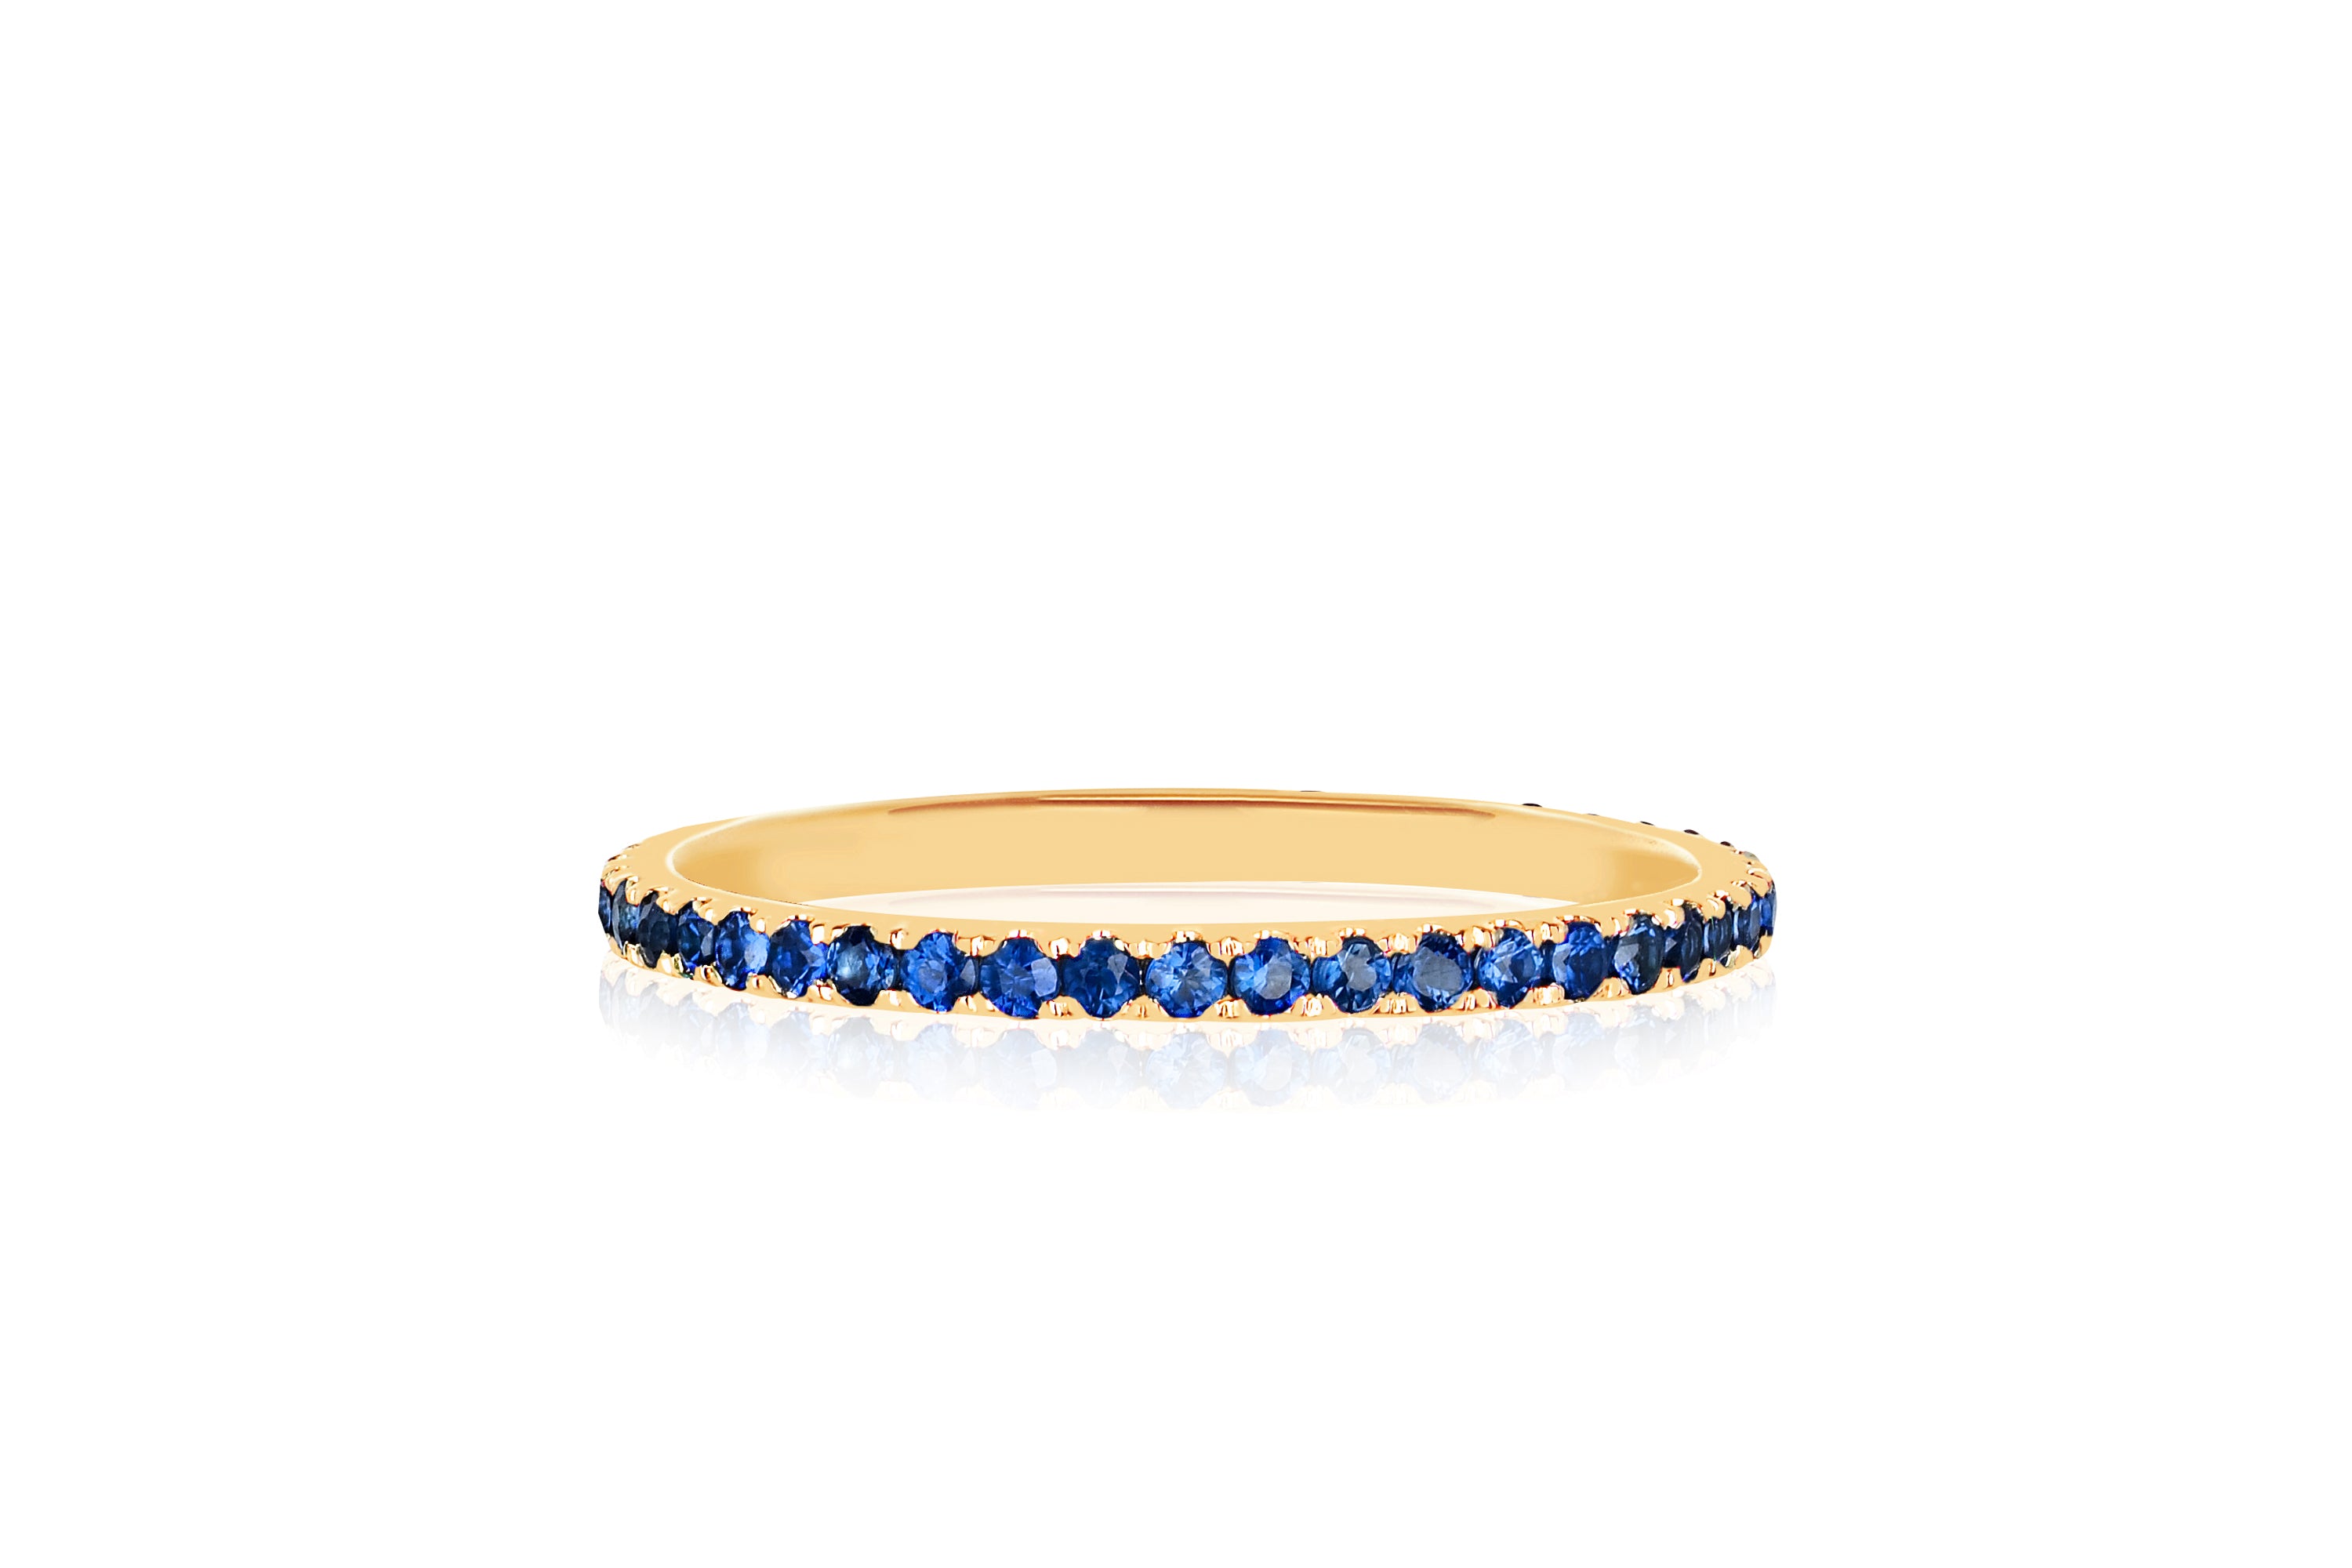 14k (karat) yellow gold ring with blue sapphire gemstones encircling.